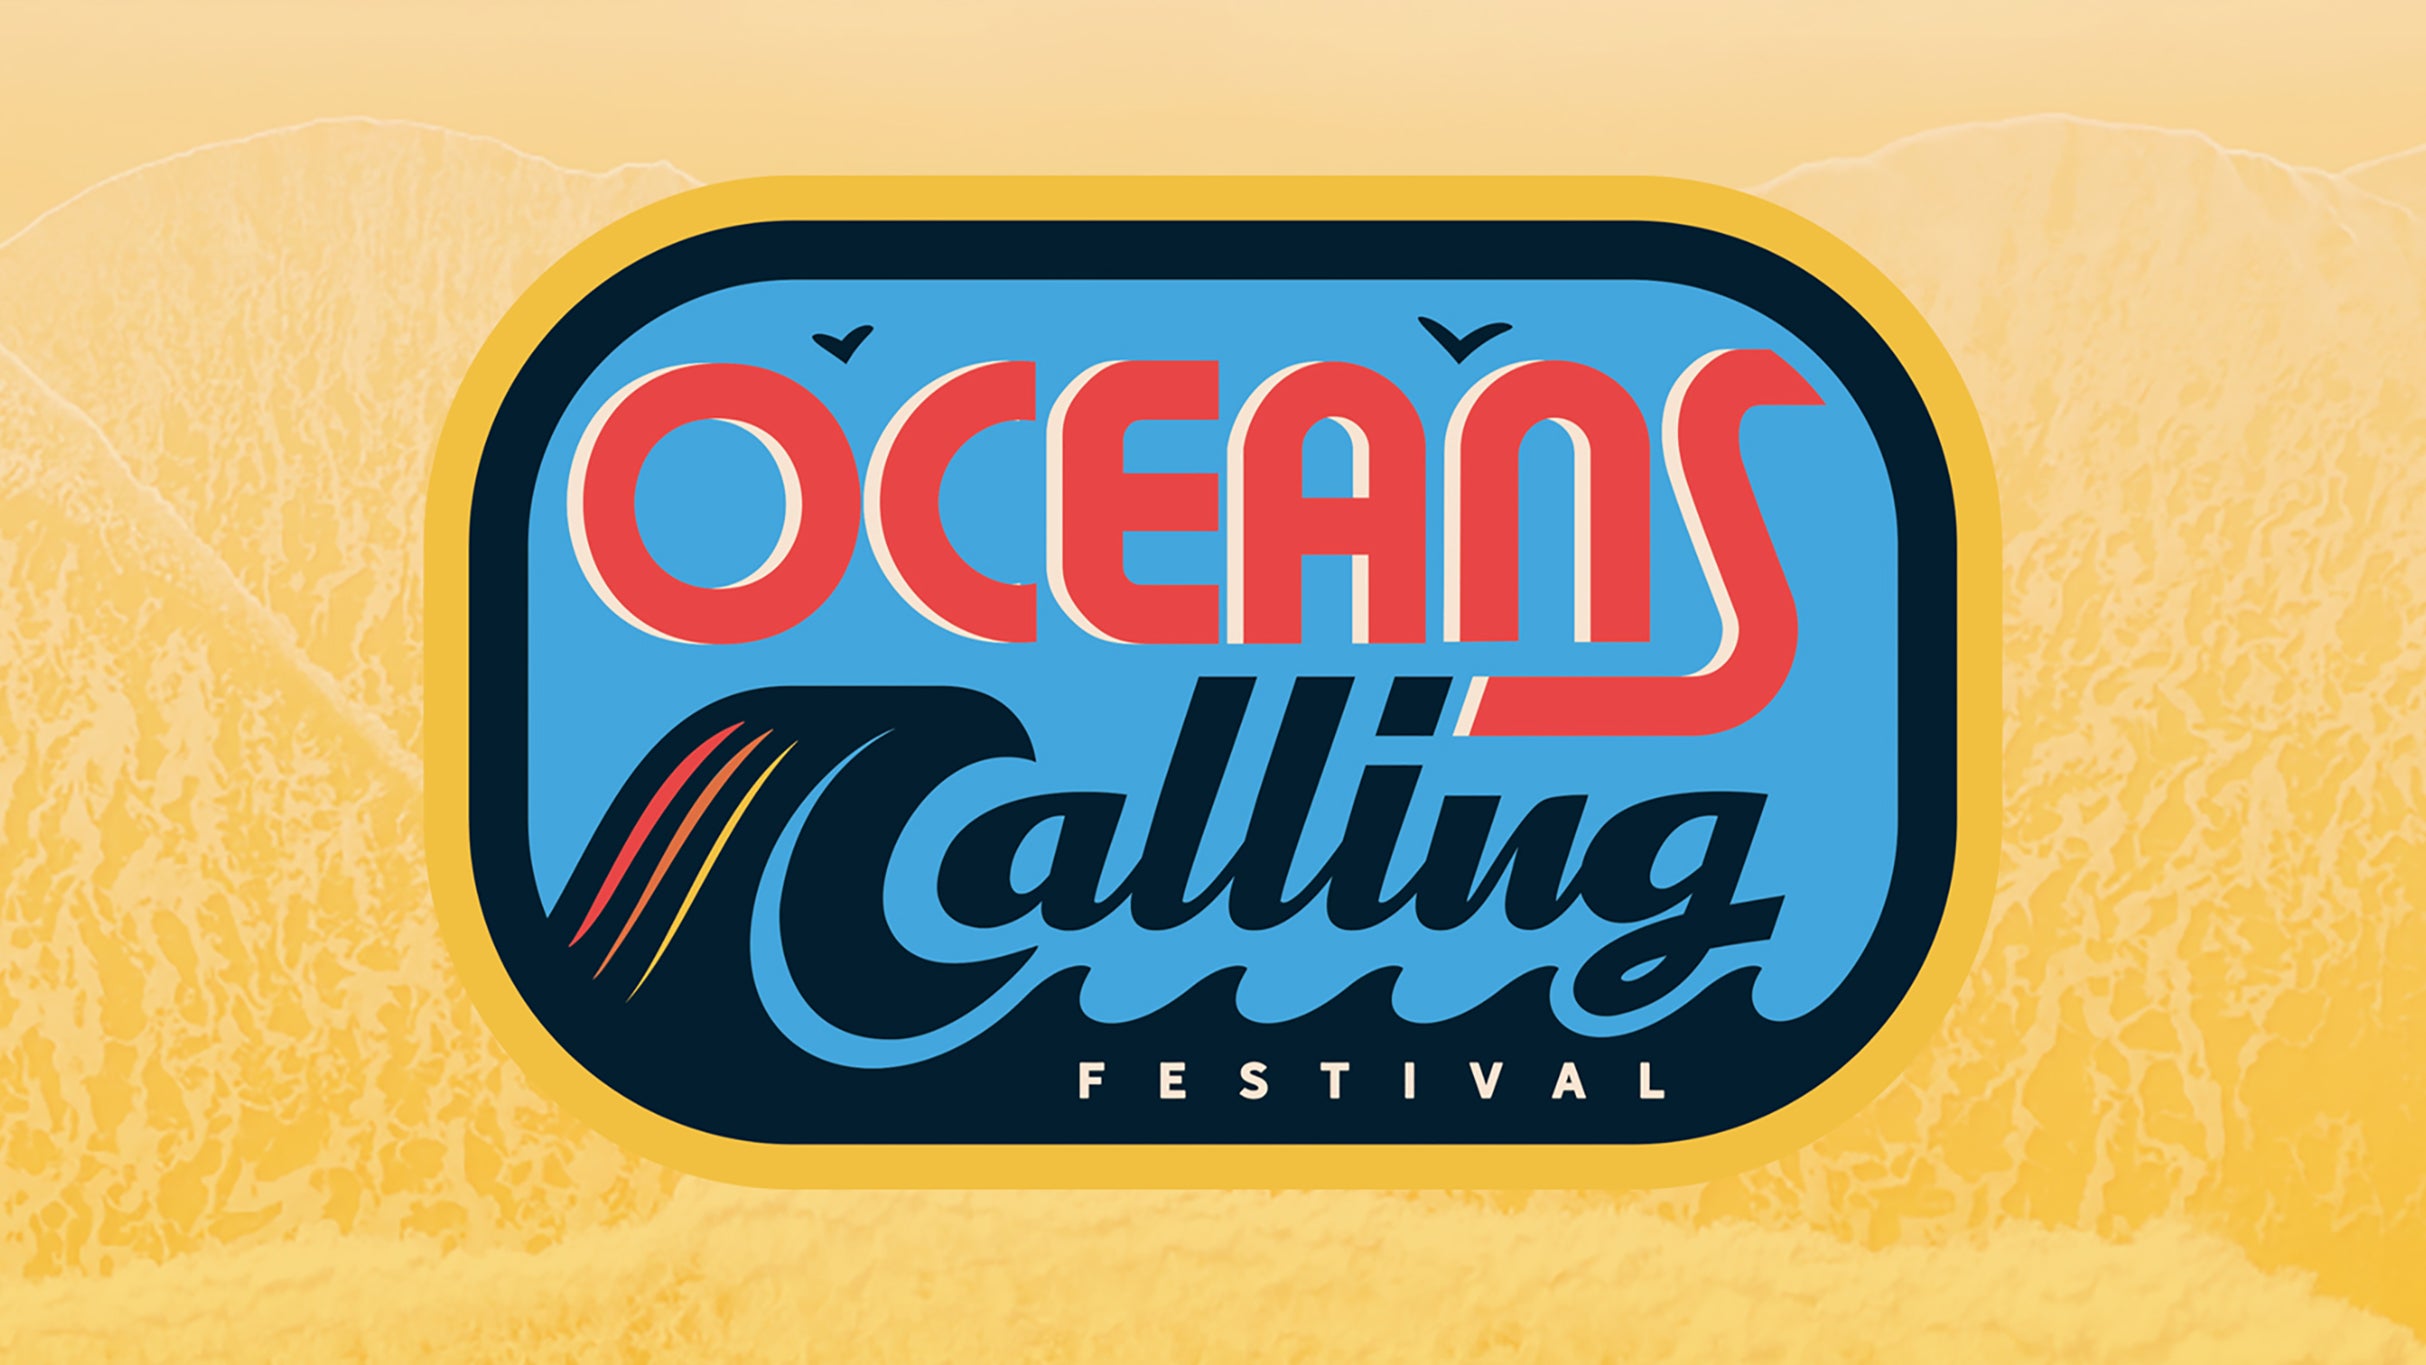 Oceans Calling at Ocean City Inlet